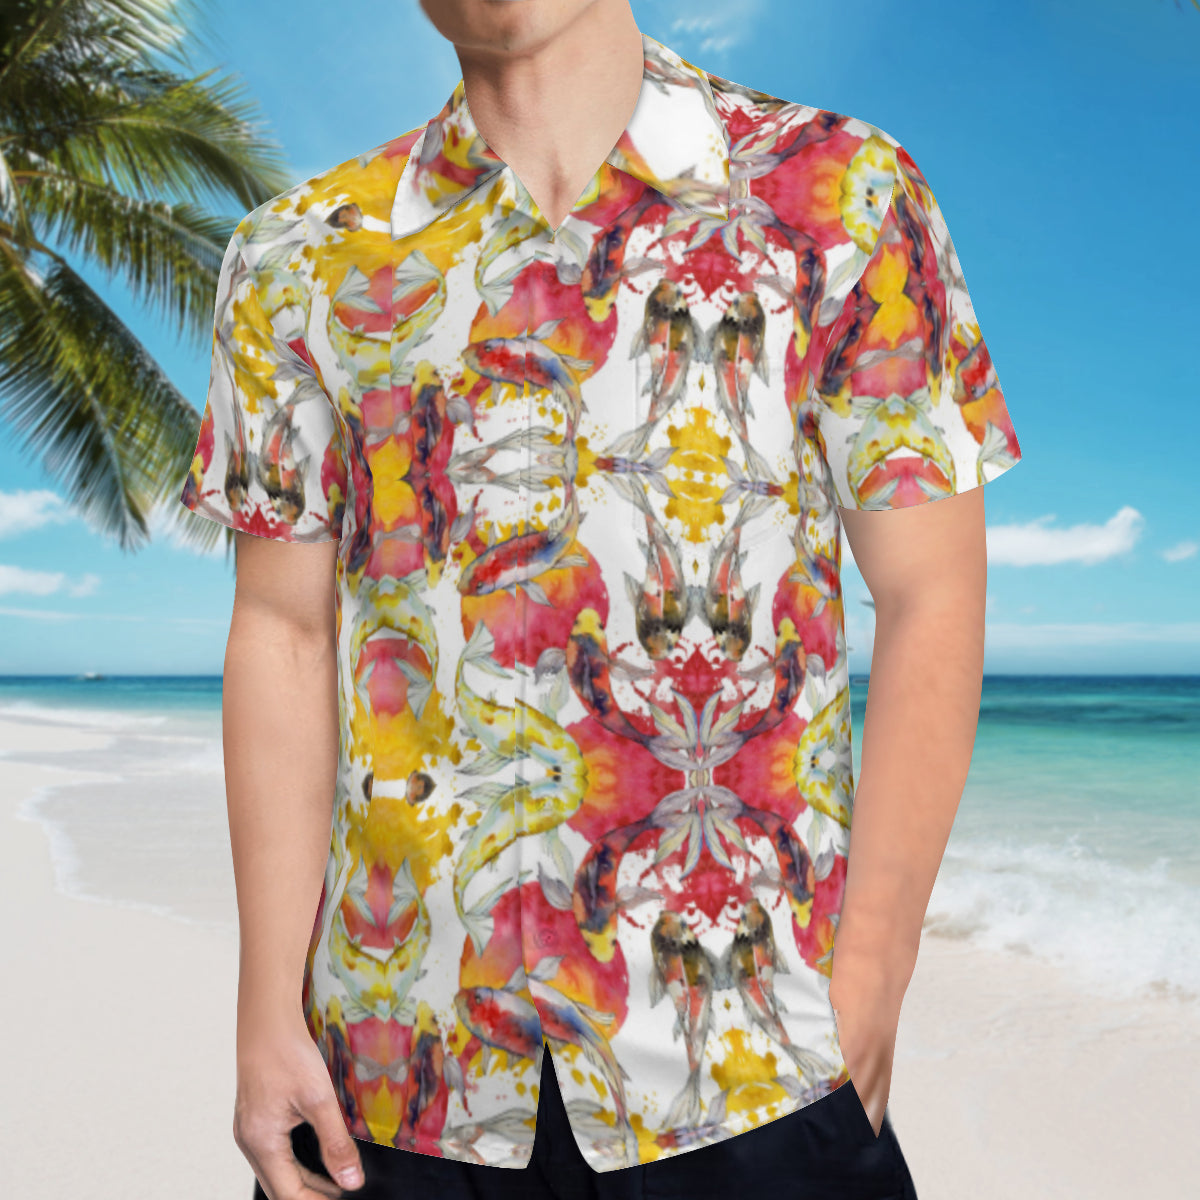 Hawaiian shirt - Design made from Coy fish